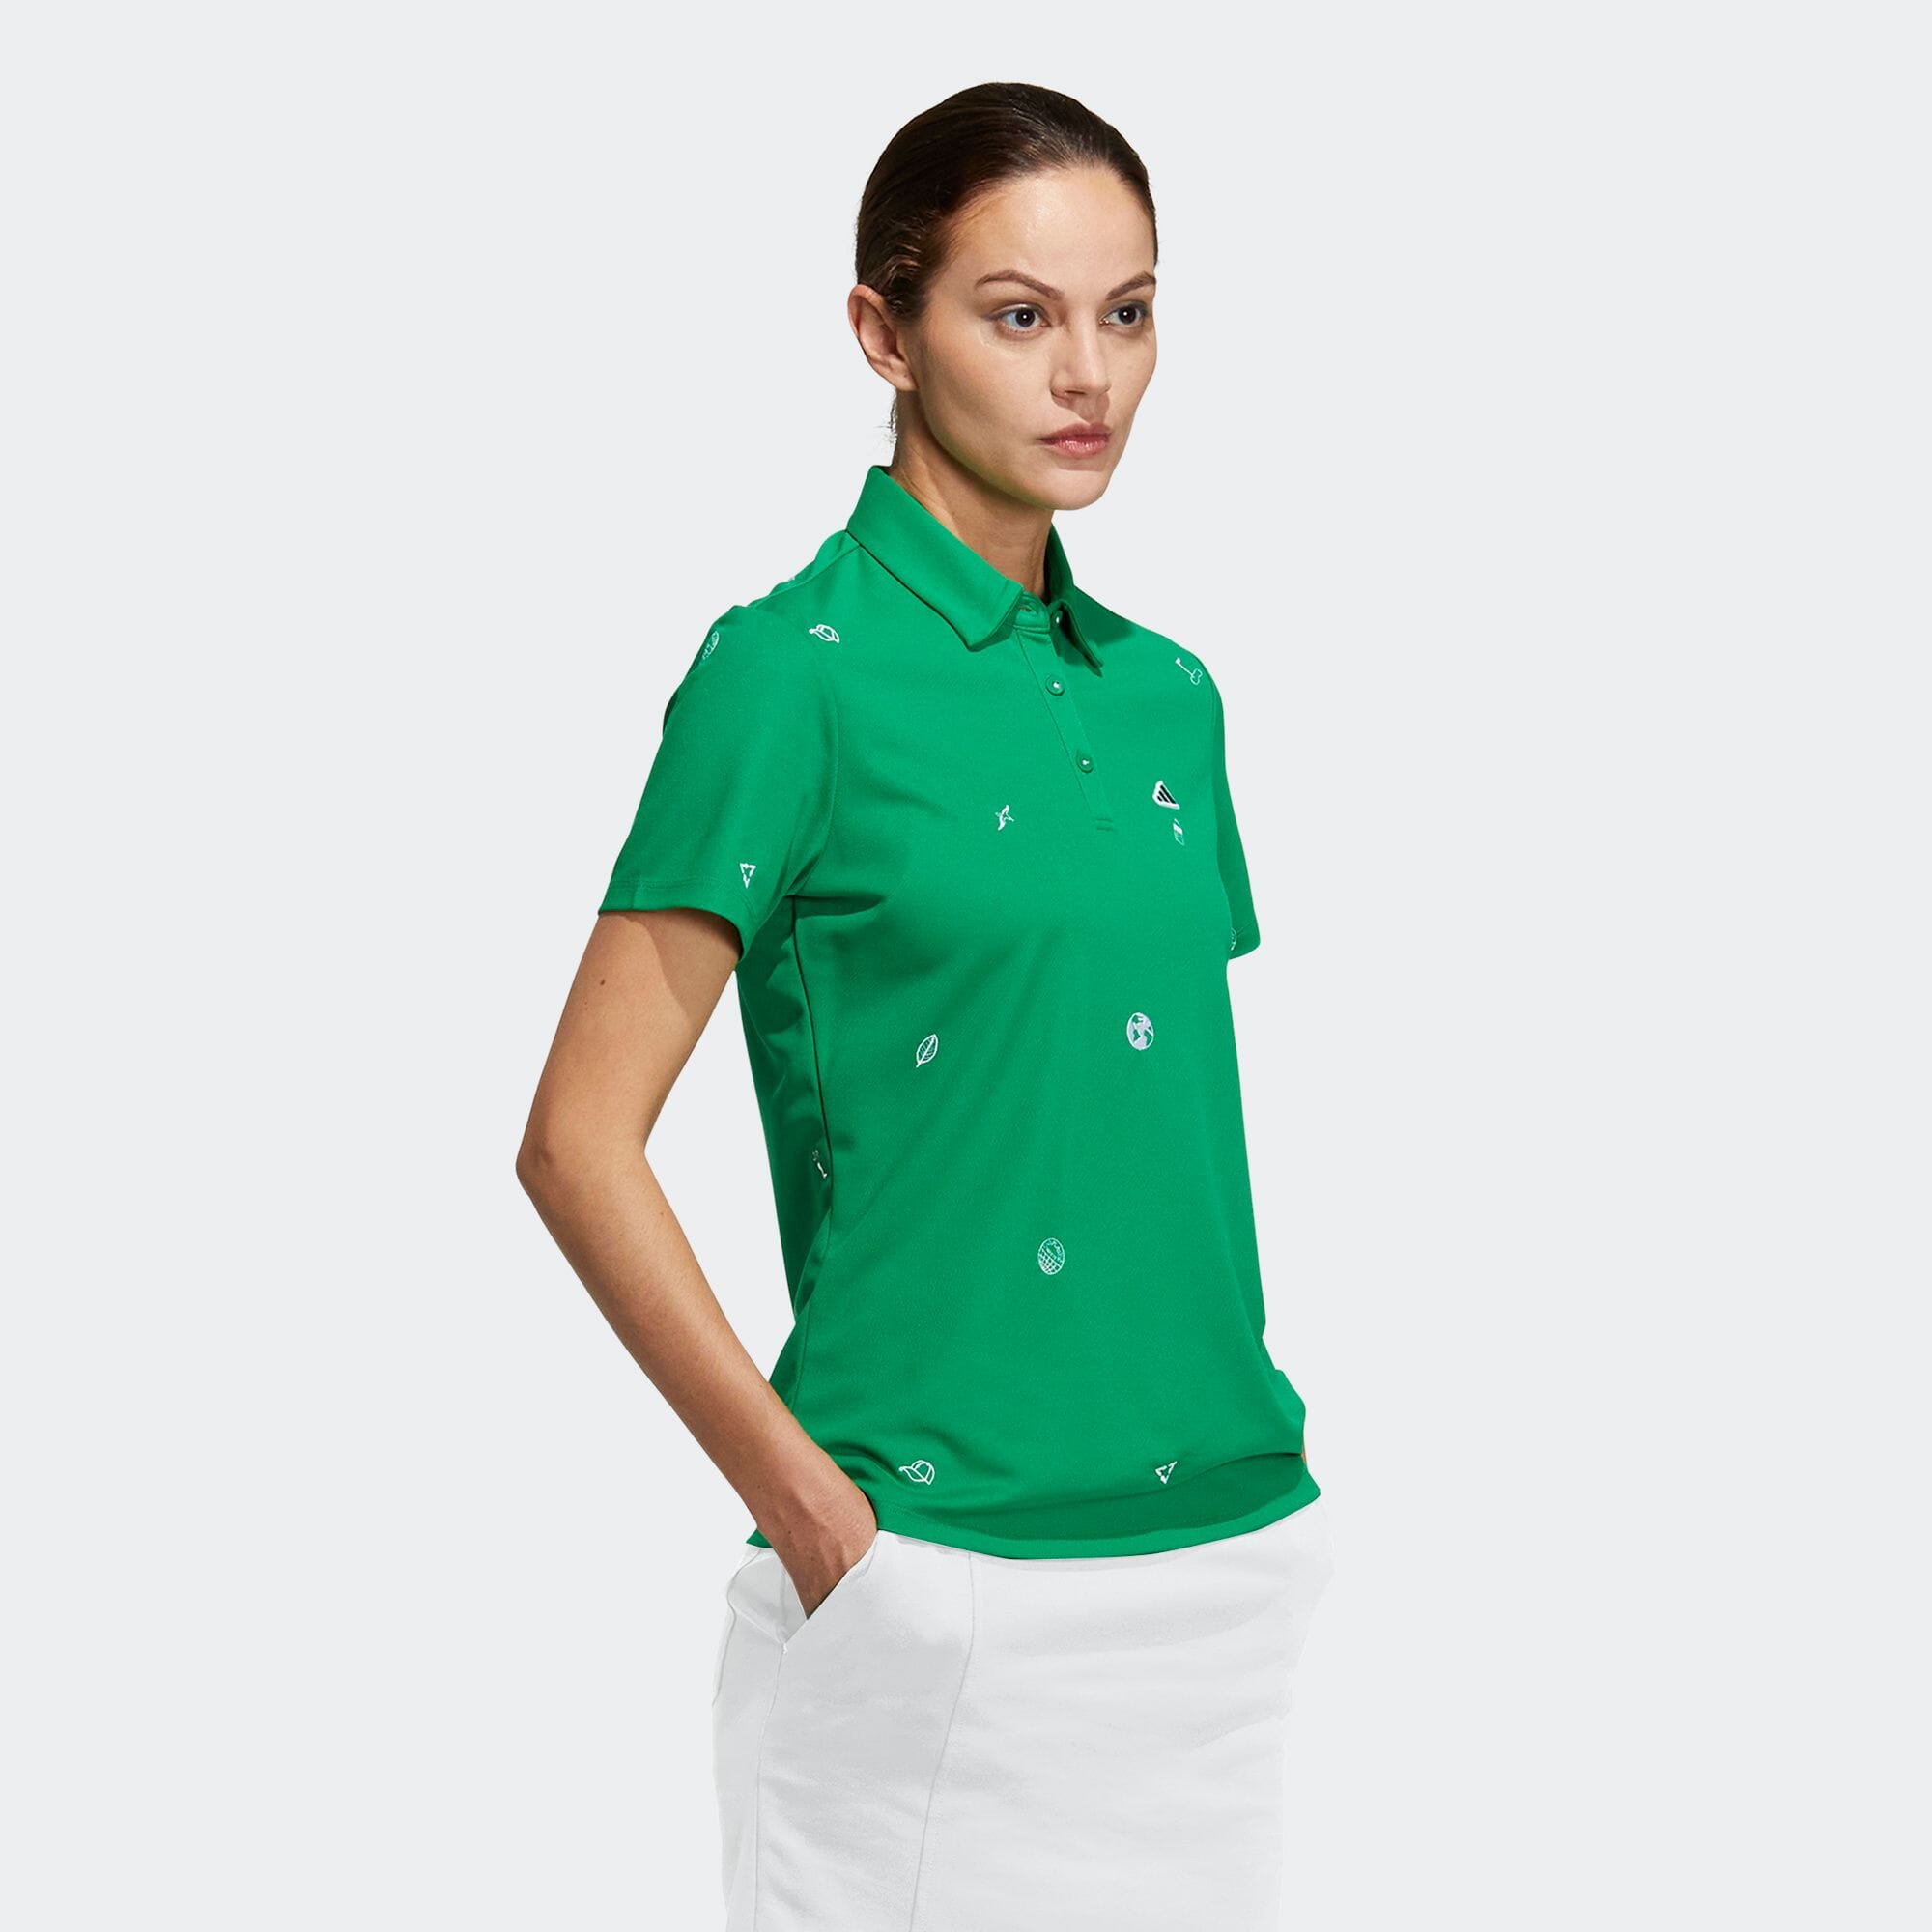 PLAY GREEN モノグラム刺繍 半袖ボタンダウンシャツ レディース ゴルフ